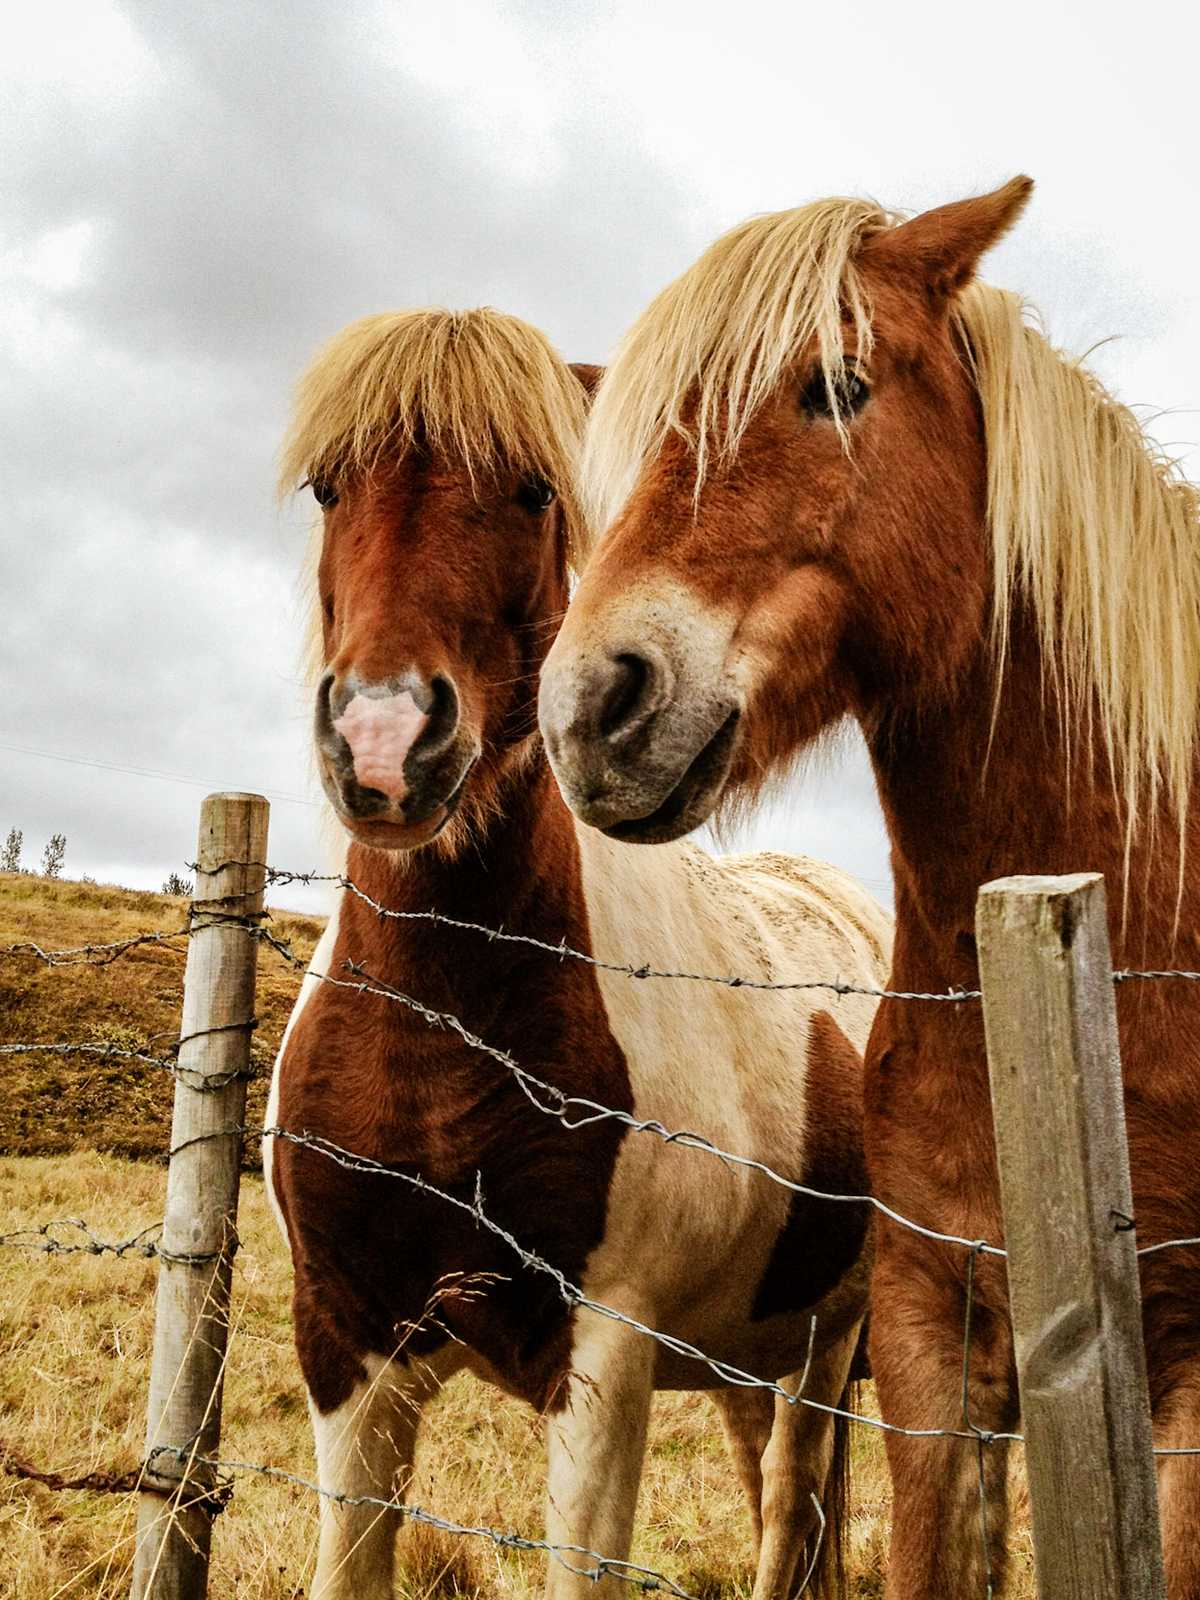 Just some Icelandic ponies